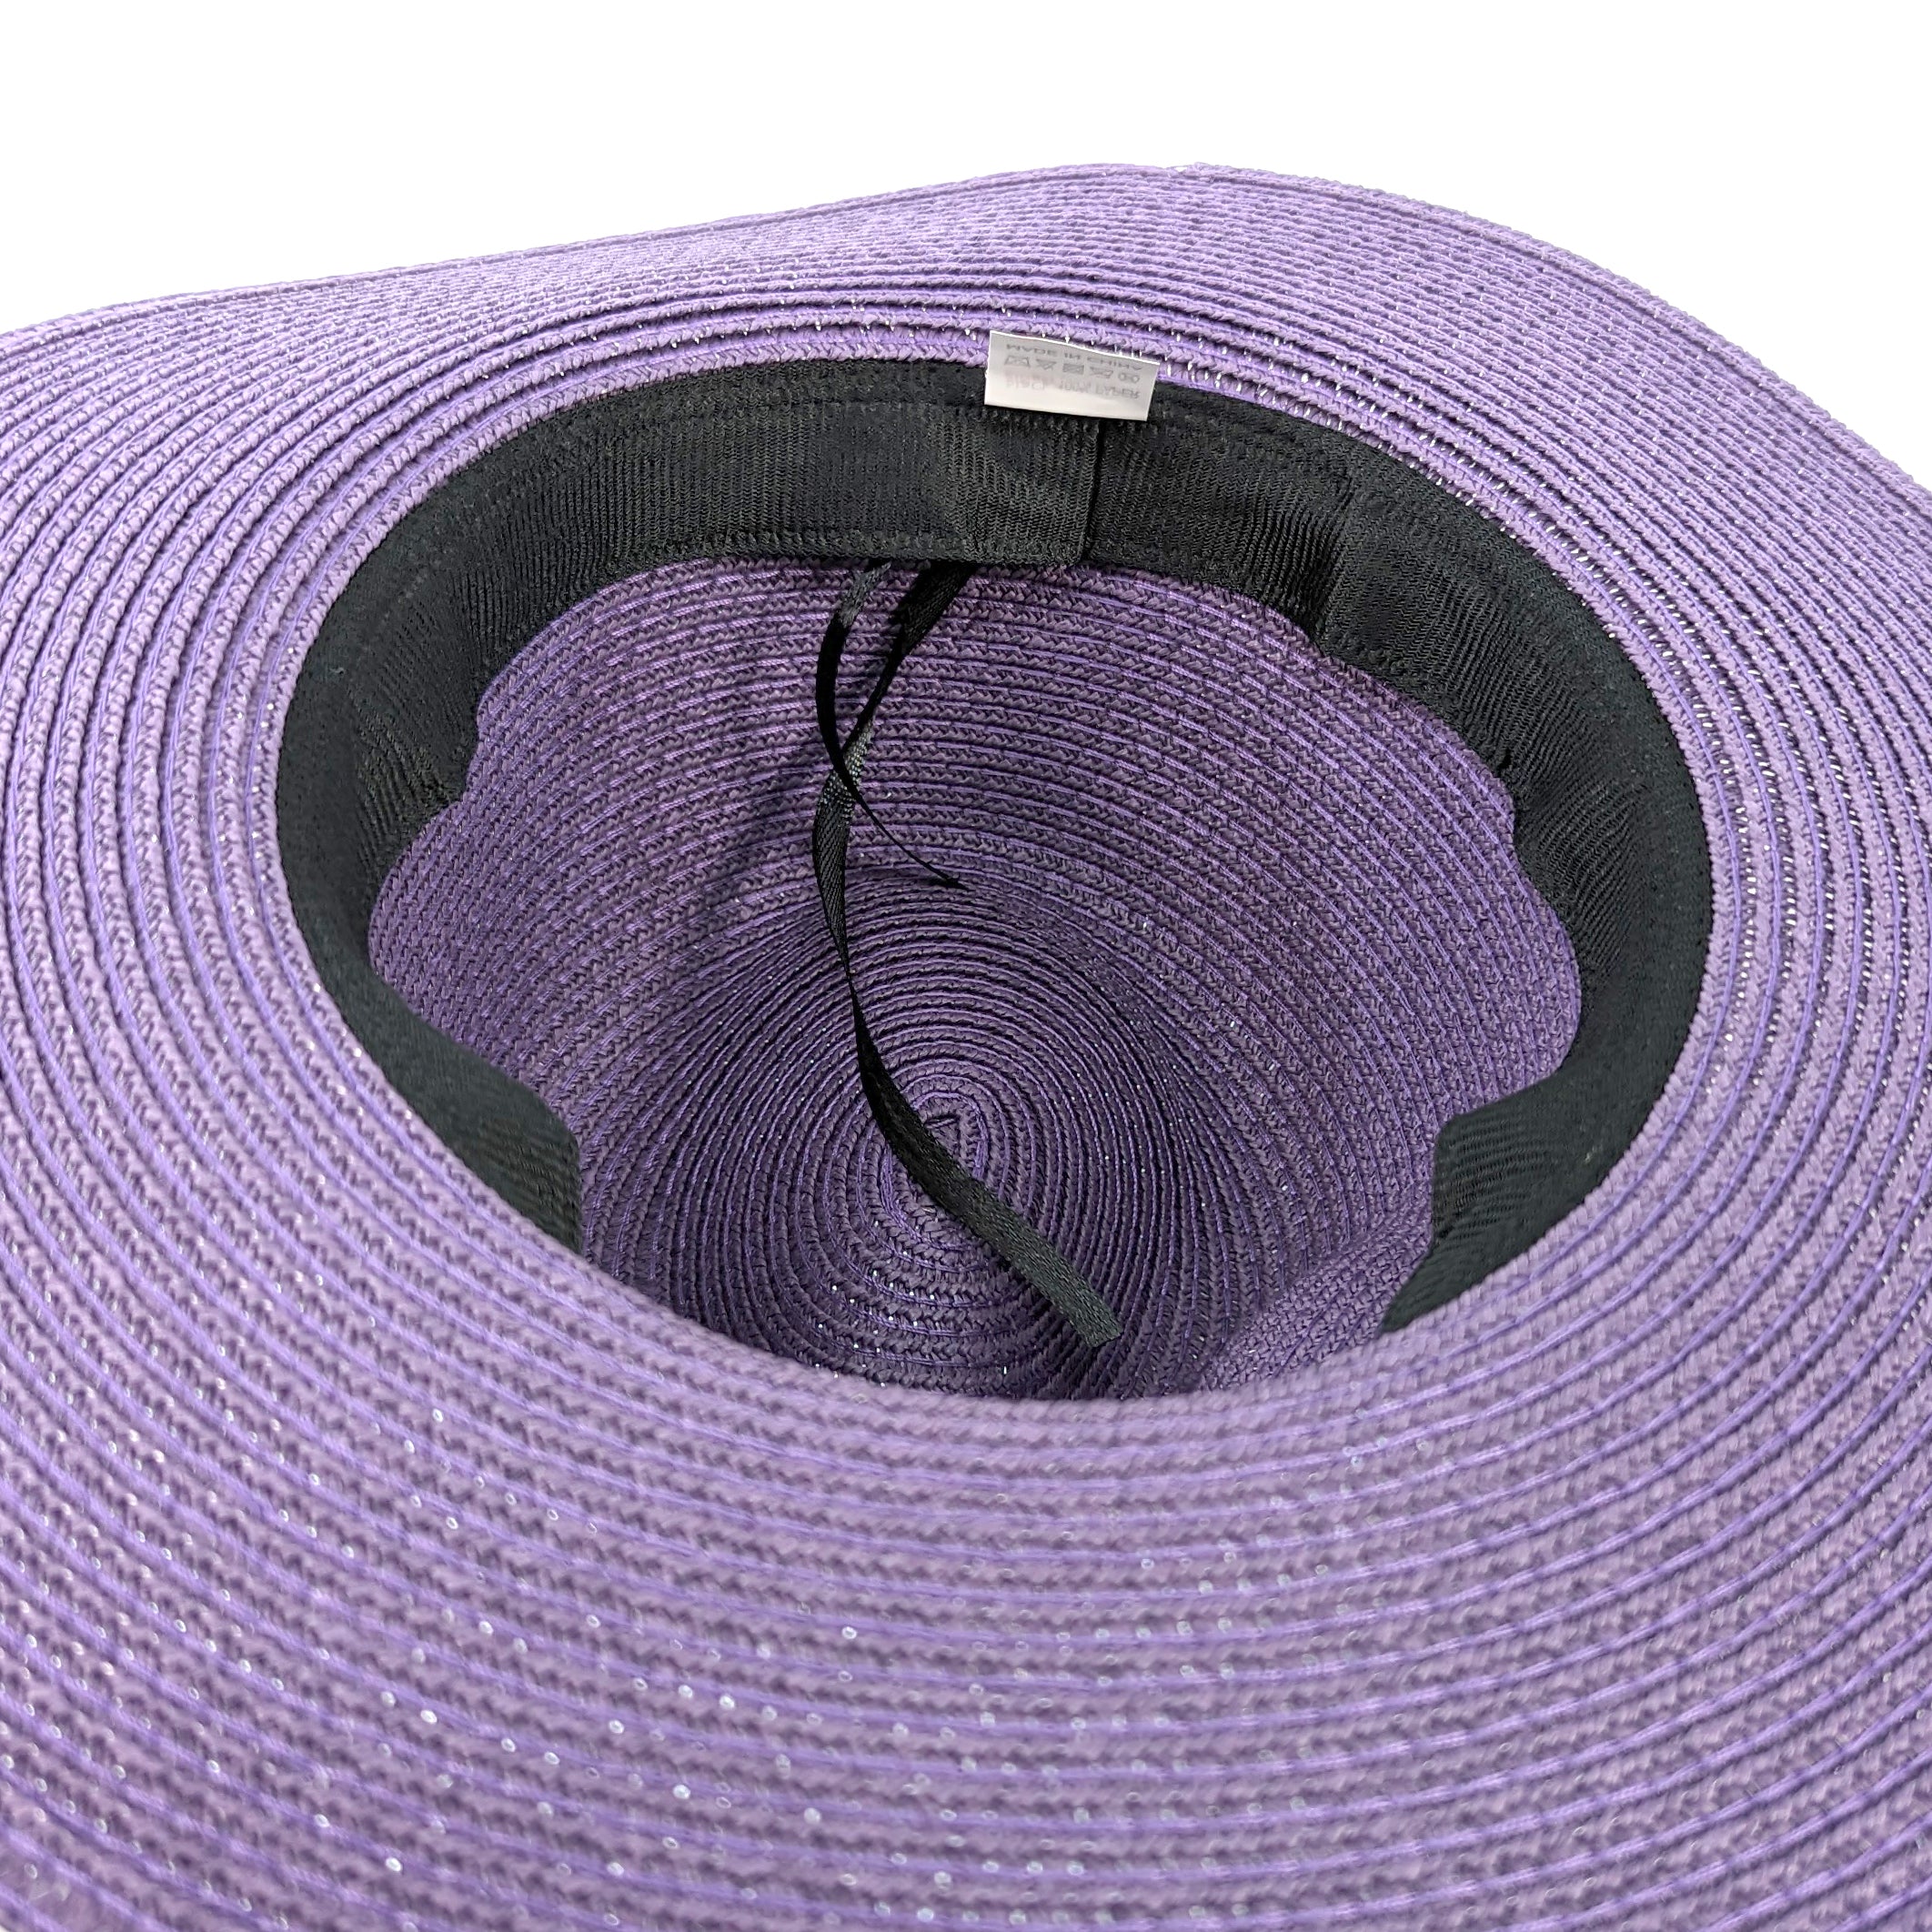 Regal Purple Panama Foldable Hat with Black Ribbon (57cm)